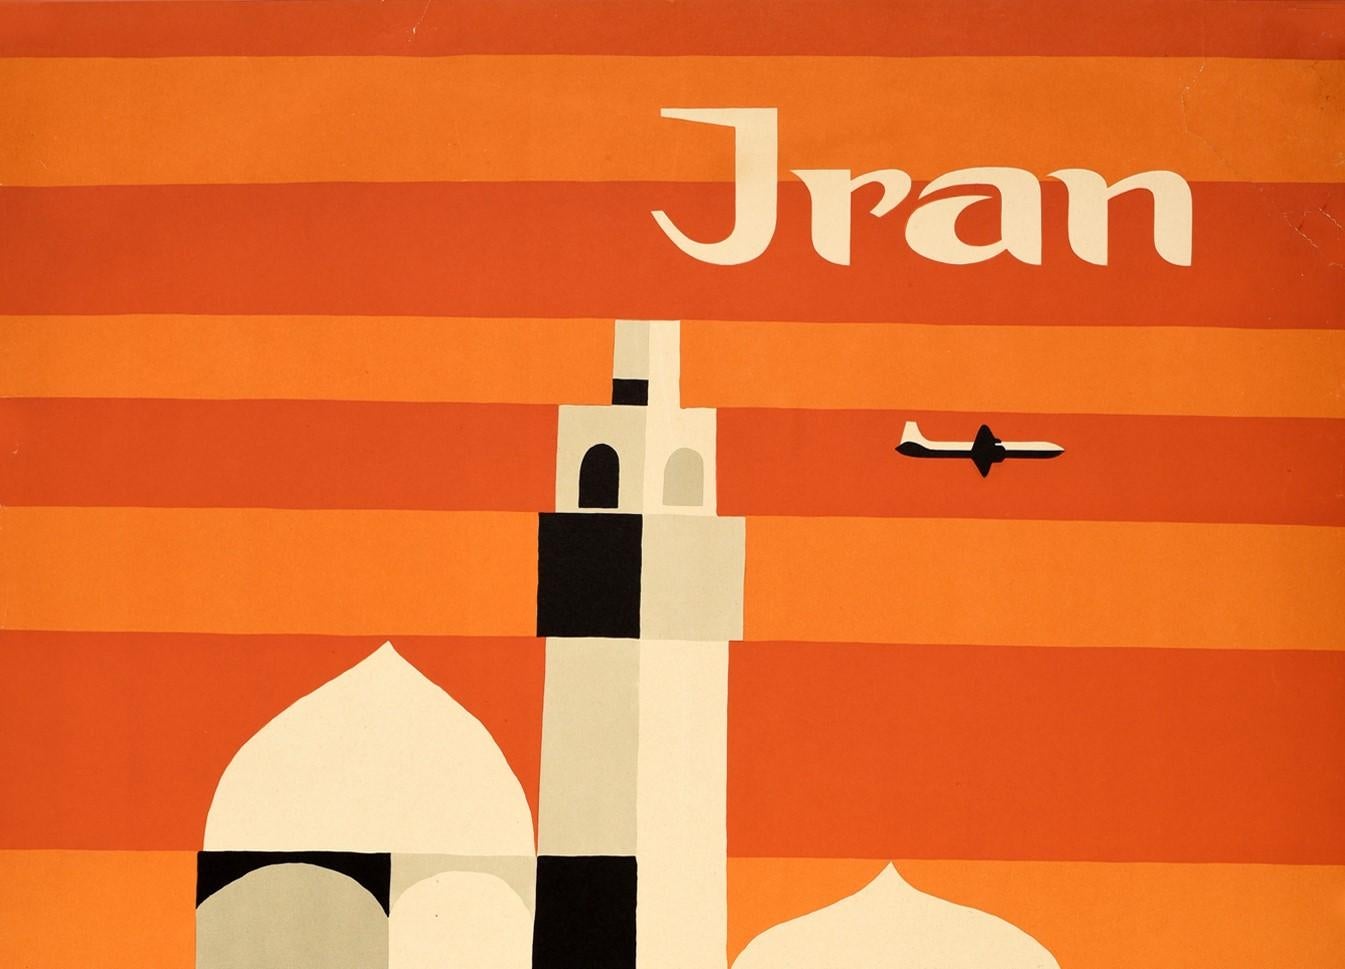 Original Vintage Mid Century Travel Poster For Iran By Alitalia Graphic Design - Print by Ennio Molinari